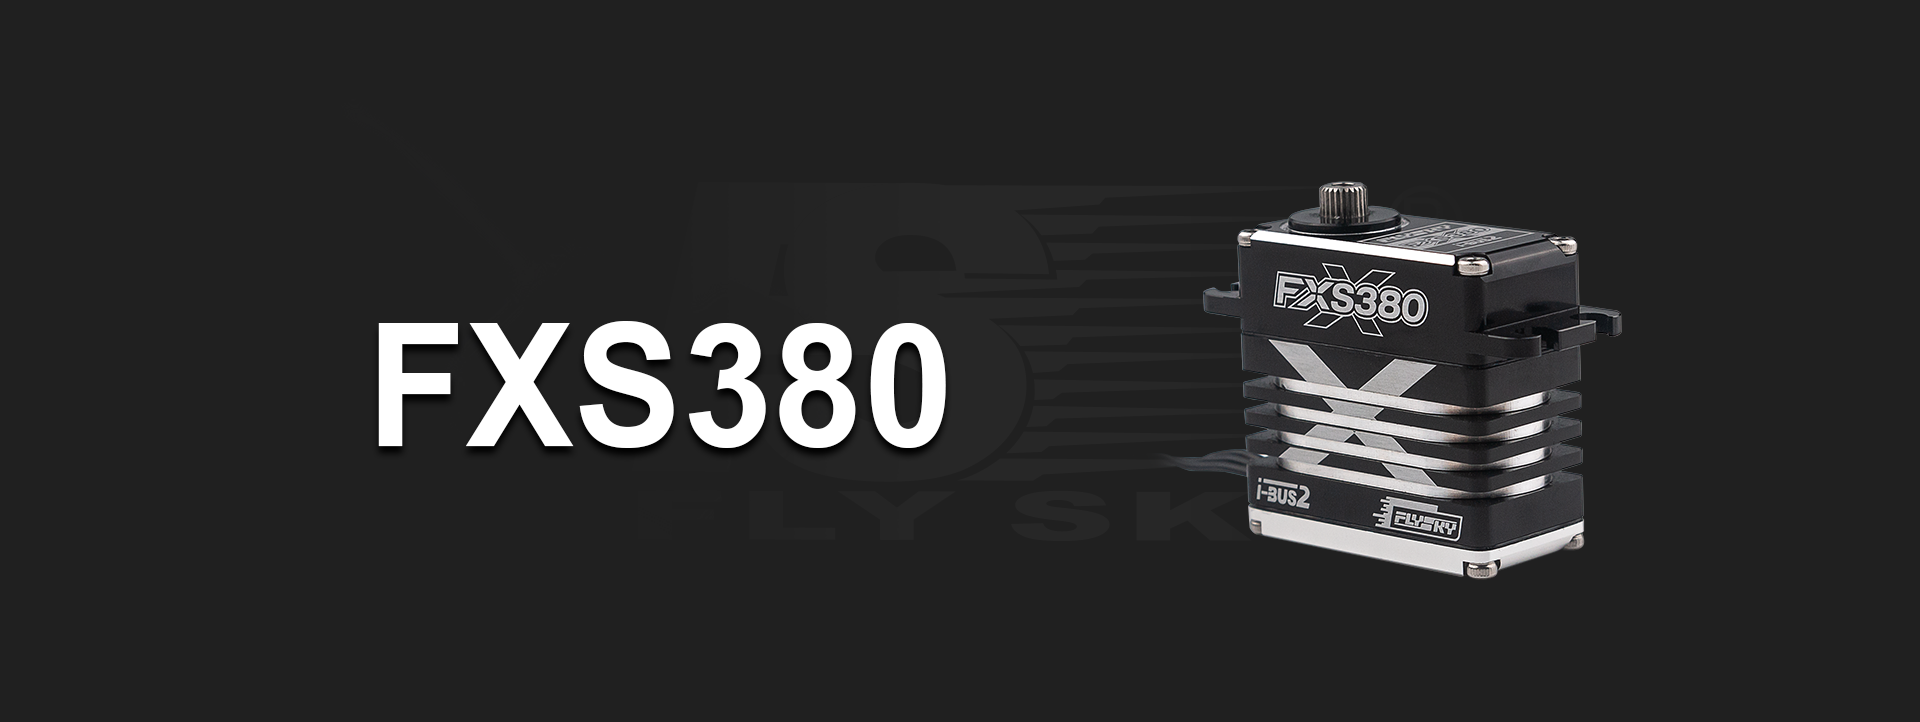 FXS380